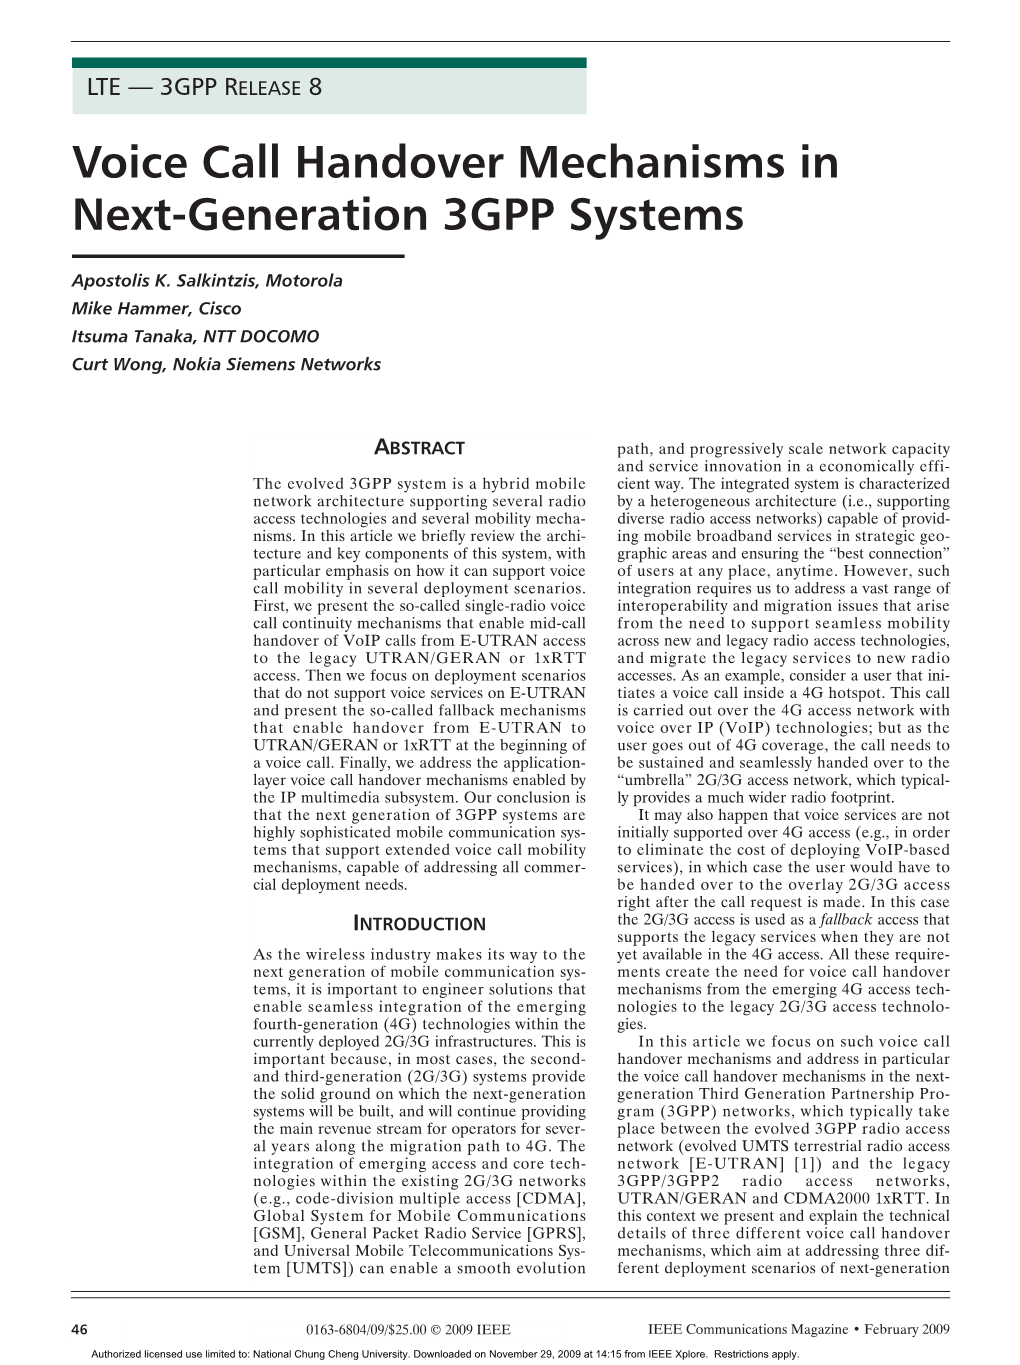 Voice Call Handover Mechanisms in Next-Generation 3GPP Systems